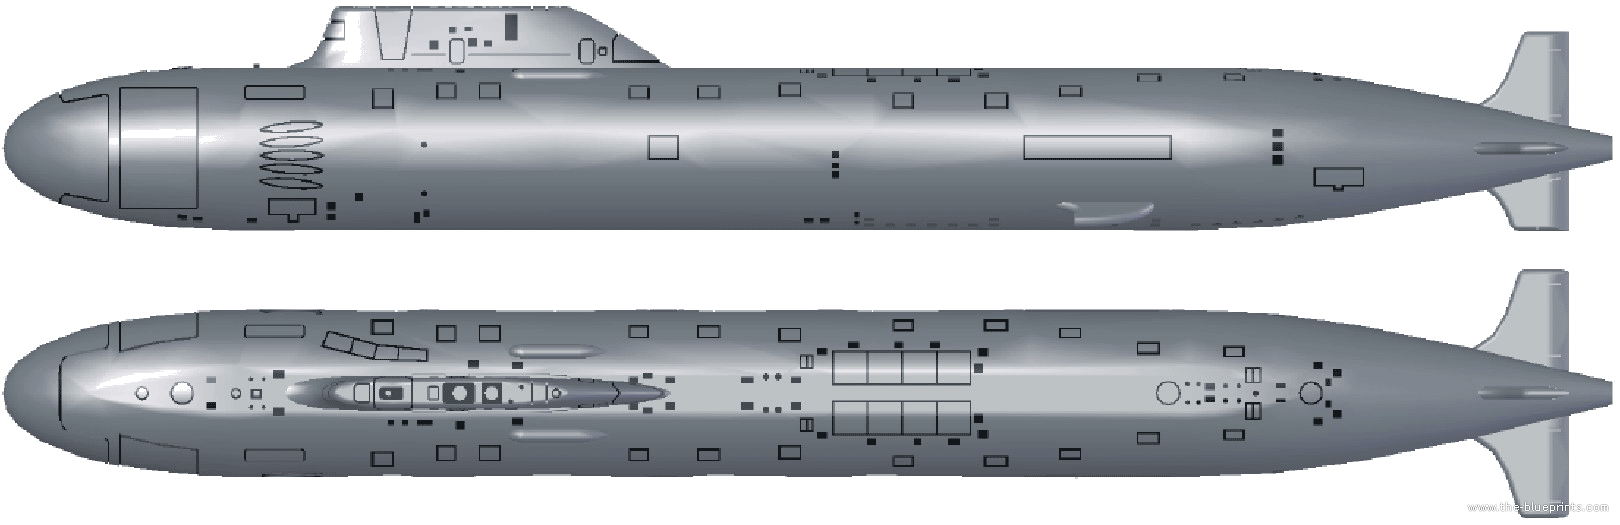 ussr-yassen-project-885-submarine